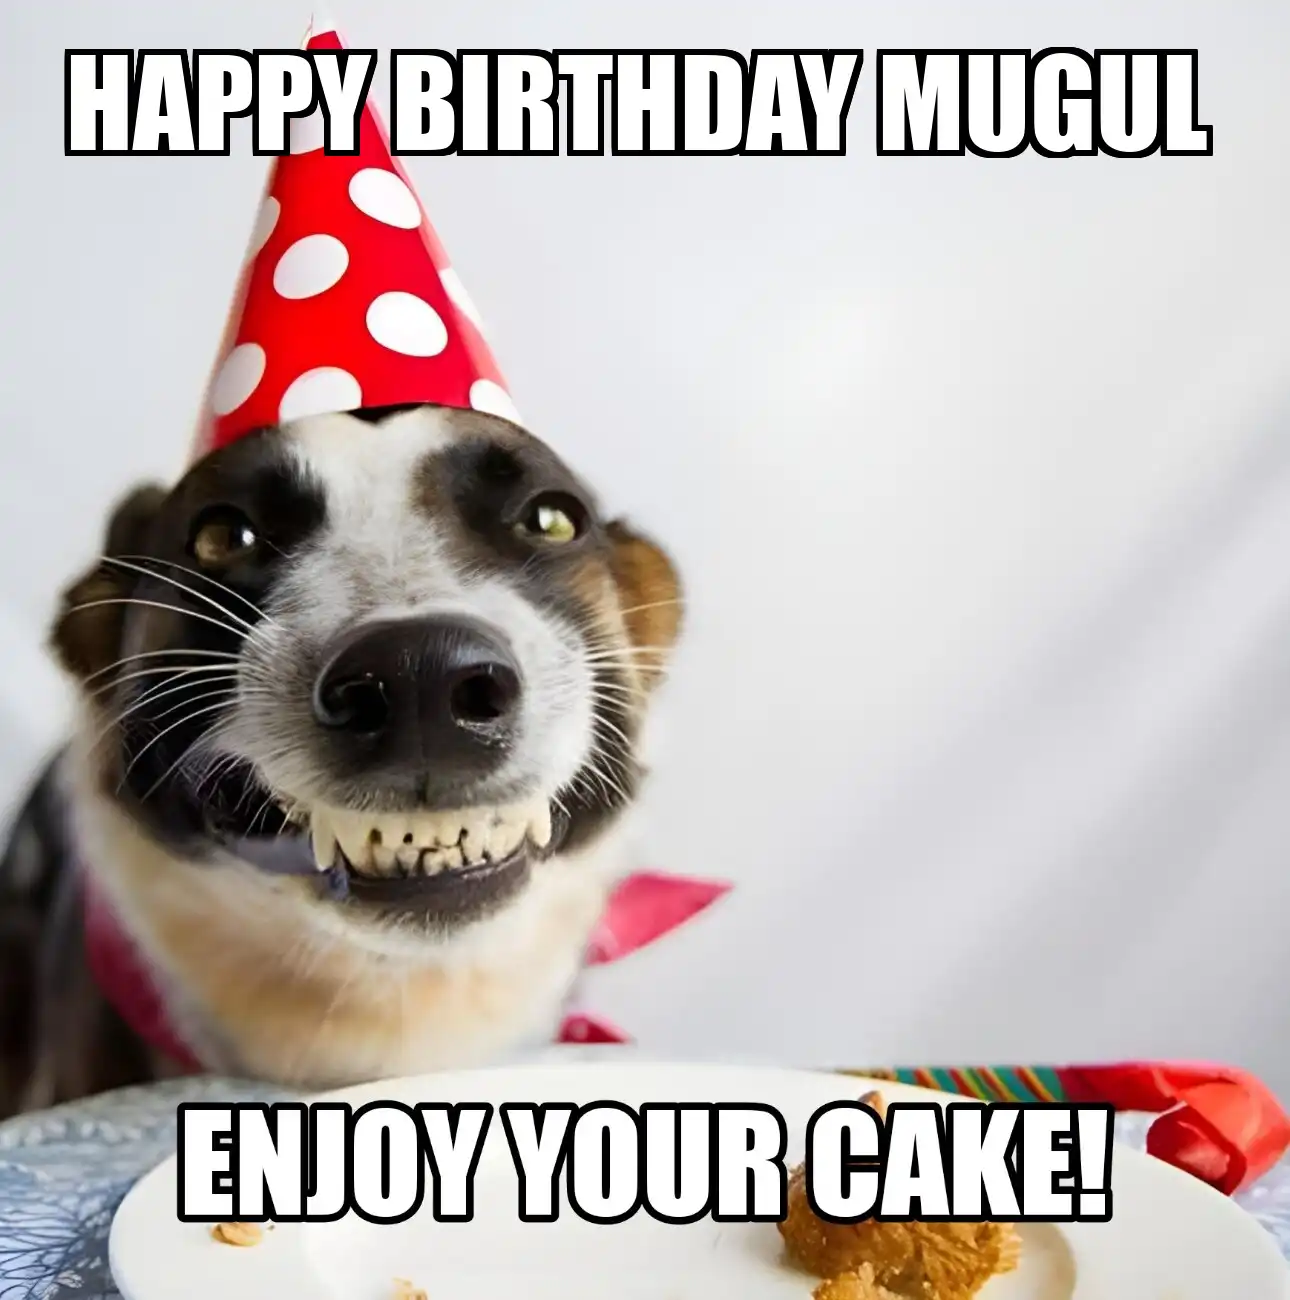 Happy Birthday Mugul Enjoy Your Cake Dog Meme